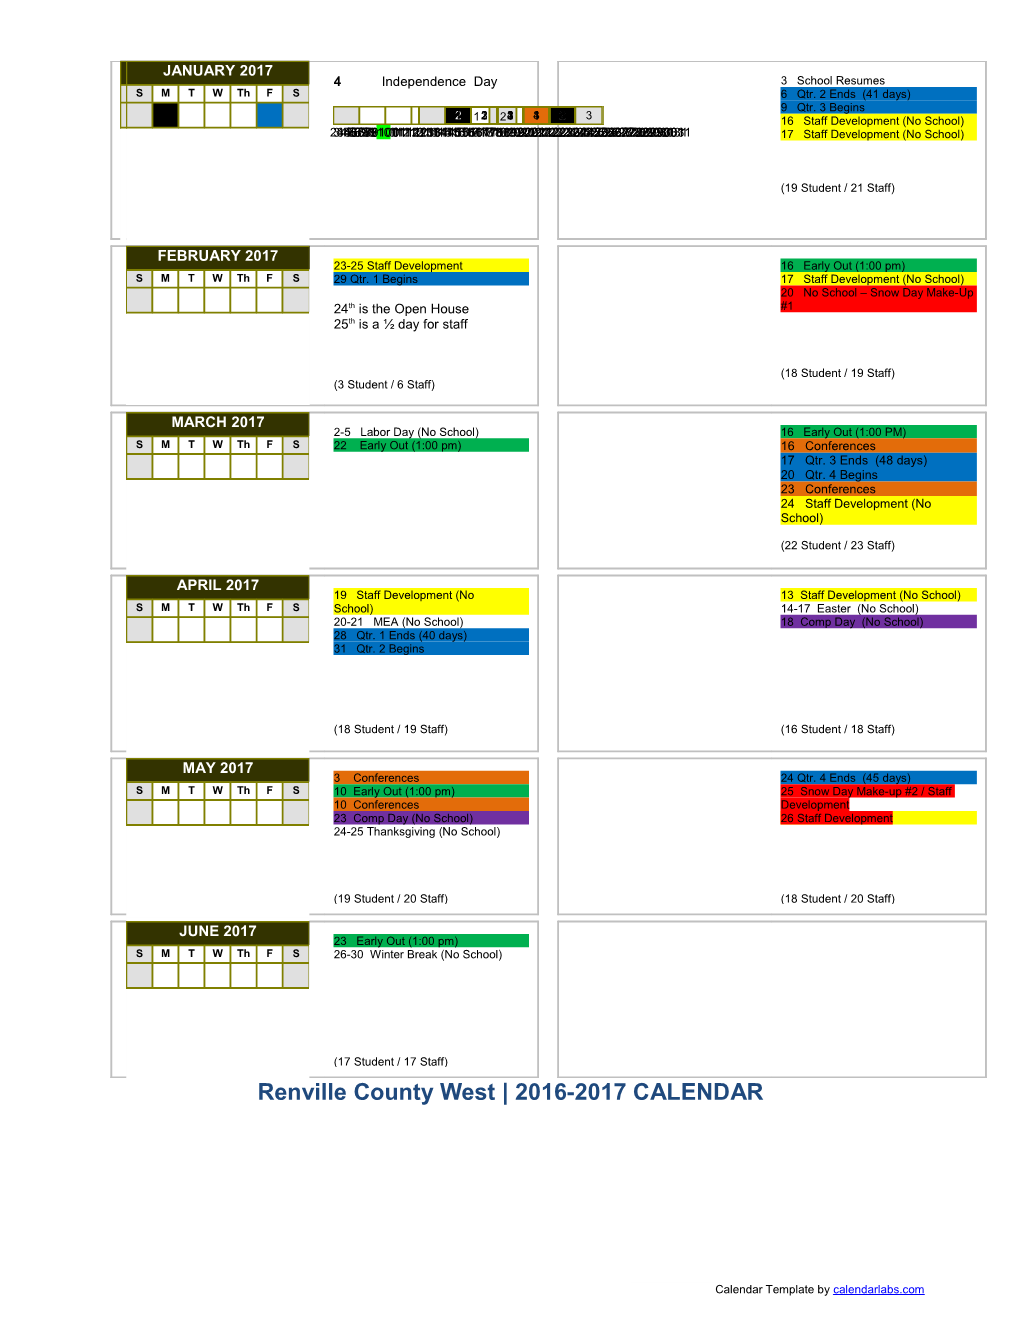 Renville County West 2016-2017 CALENDAR